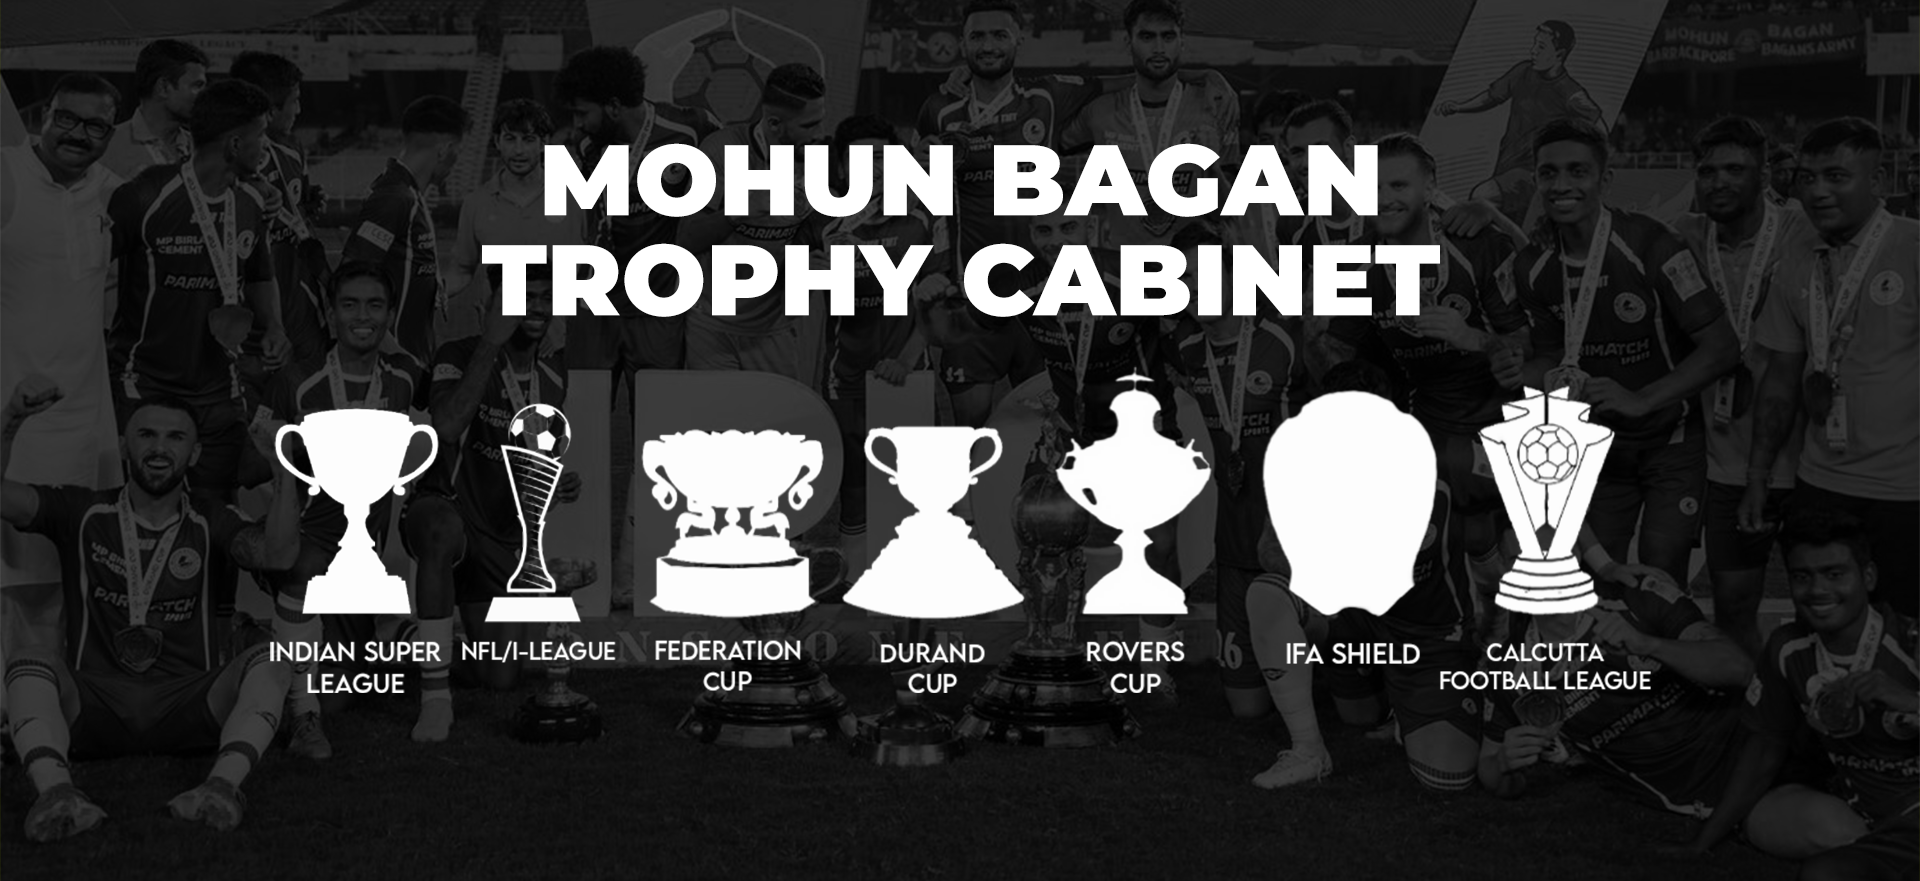 Mohun bagan Trophy Cabinet